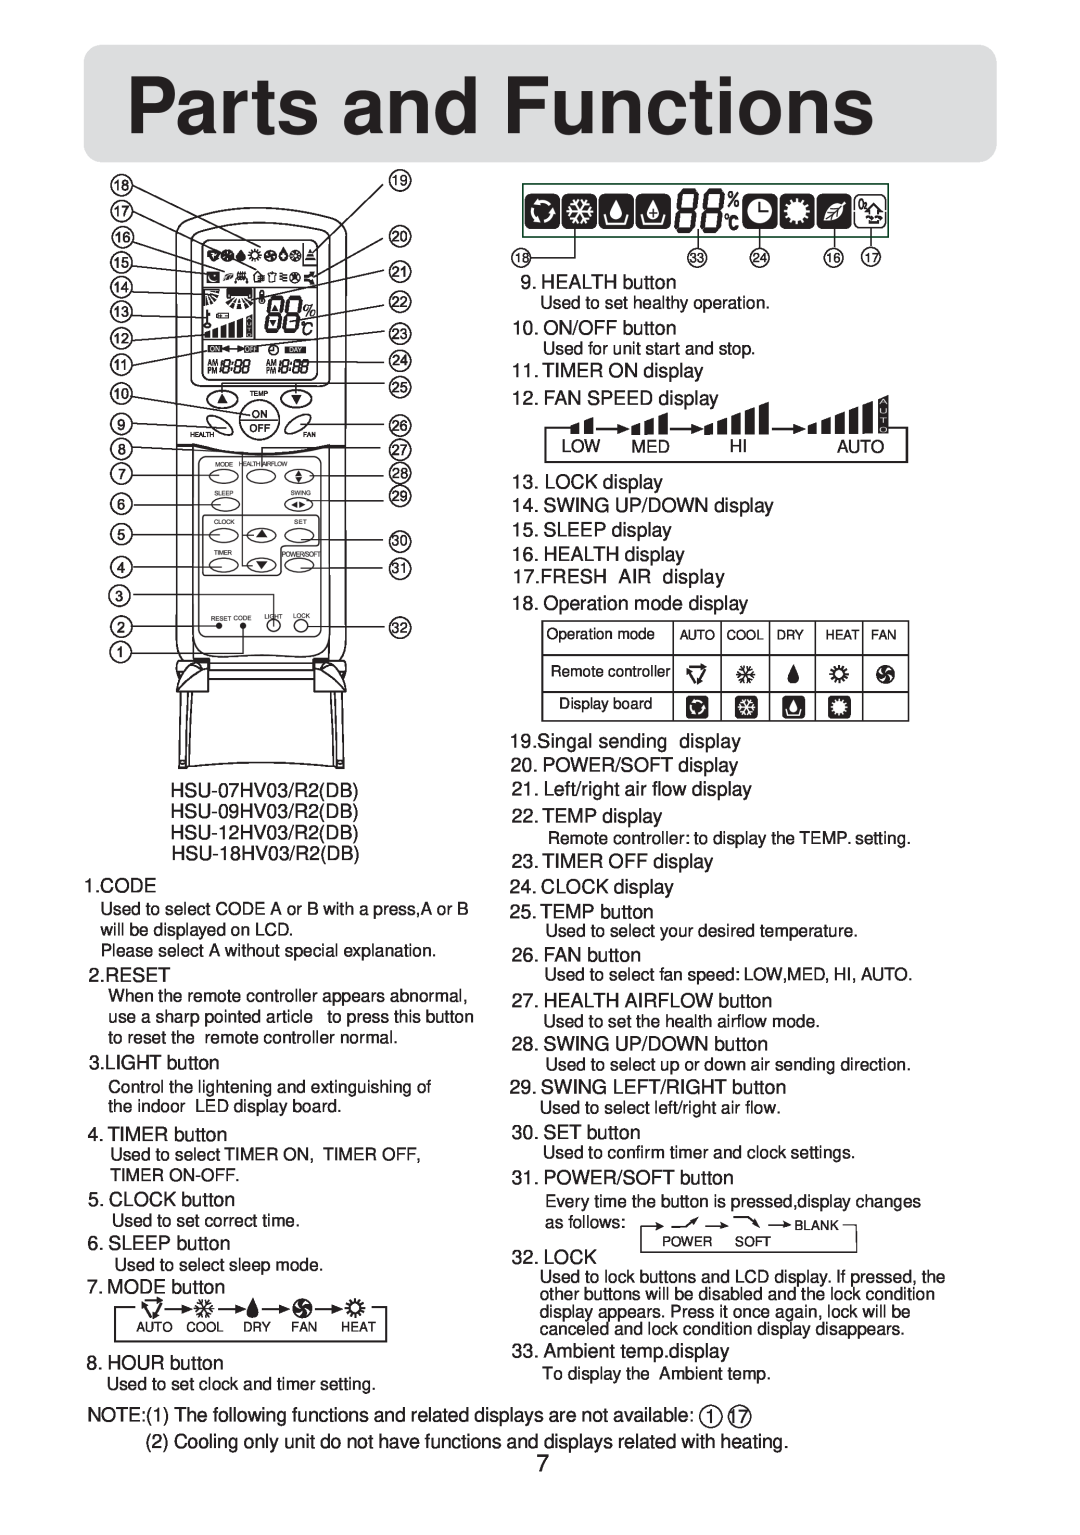 Haier HSU-09HV03/R2(SDB), HSU-12HV03/R2(SDB) operation manual Parts and Functions 